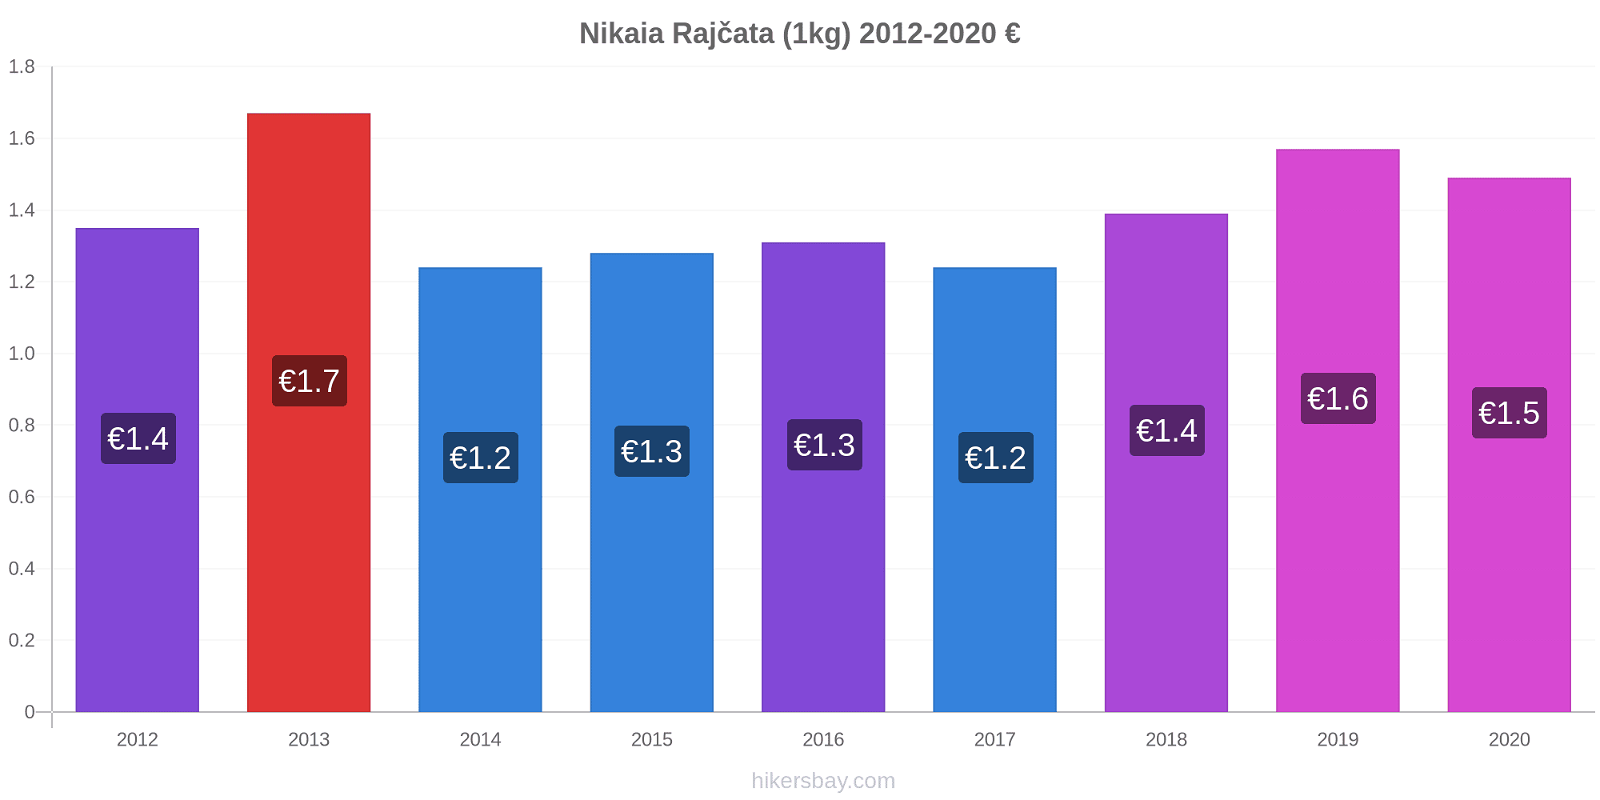 Nikaia změny cen Rajčata (1kg) hikersbay.com